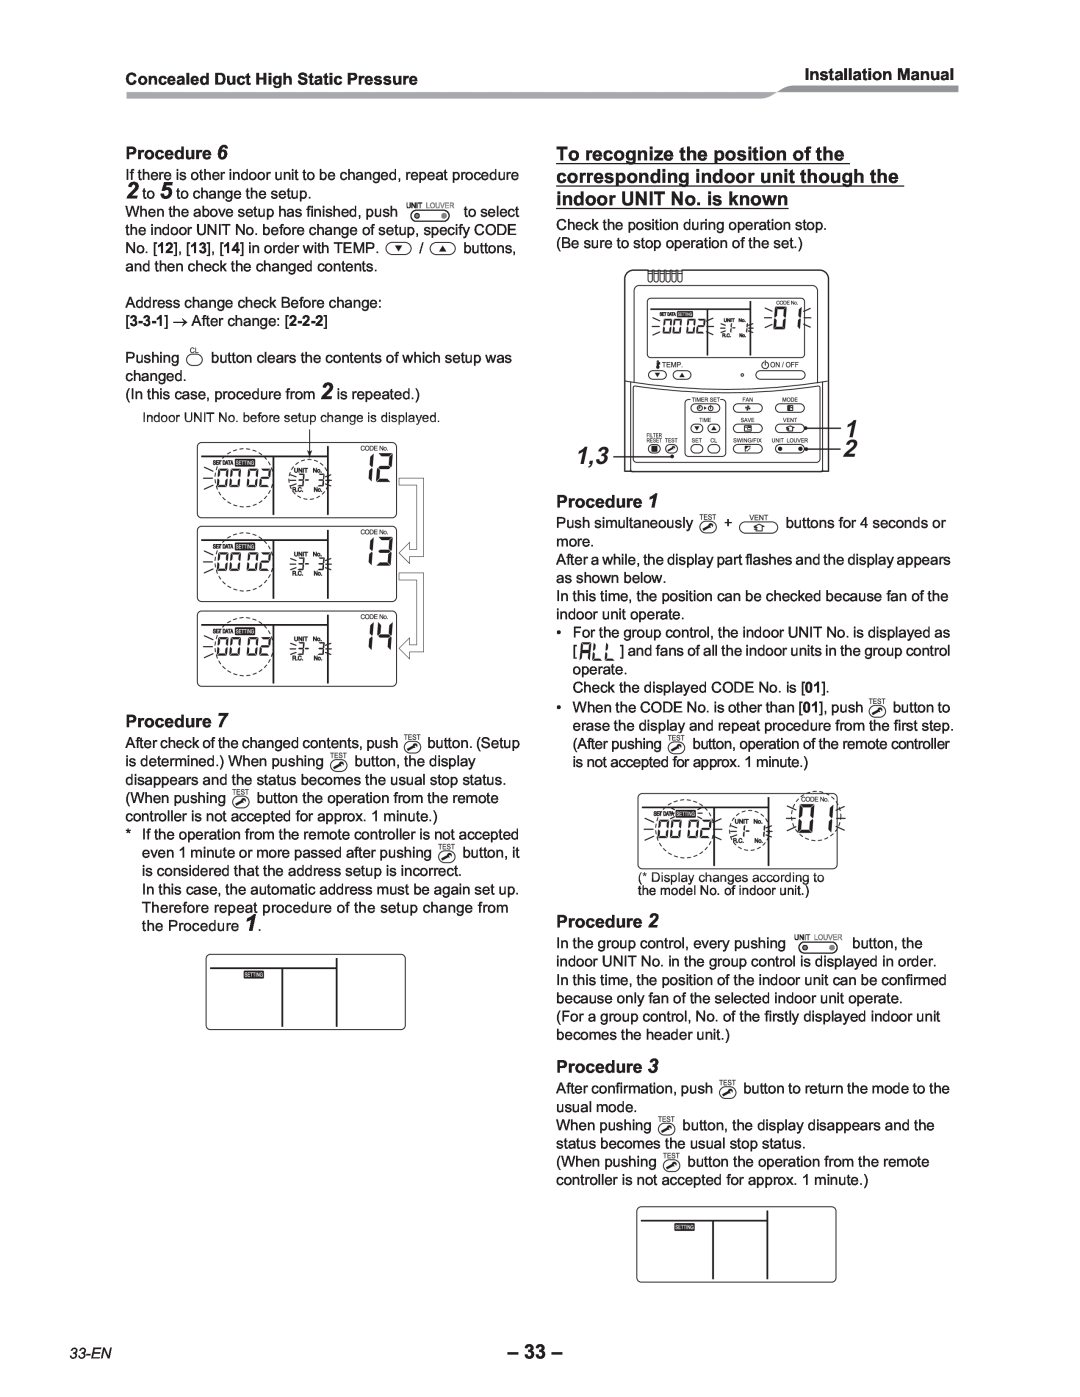 Toshiba RAV-SM2802DT-E, RAV-SM2242DT-E Procedure, Concealed Duct High Static Pressure, Installation Manual, 33-EN 